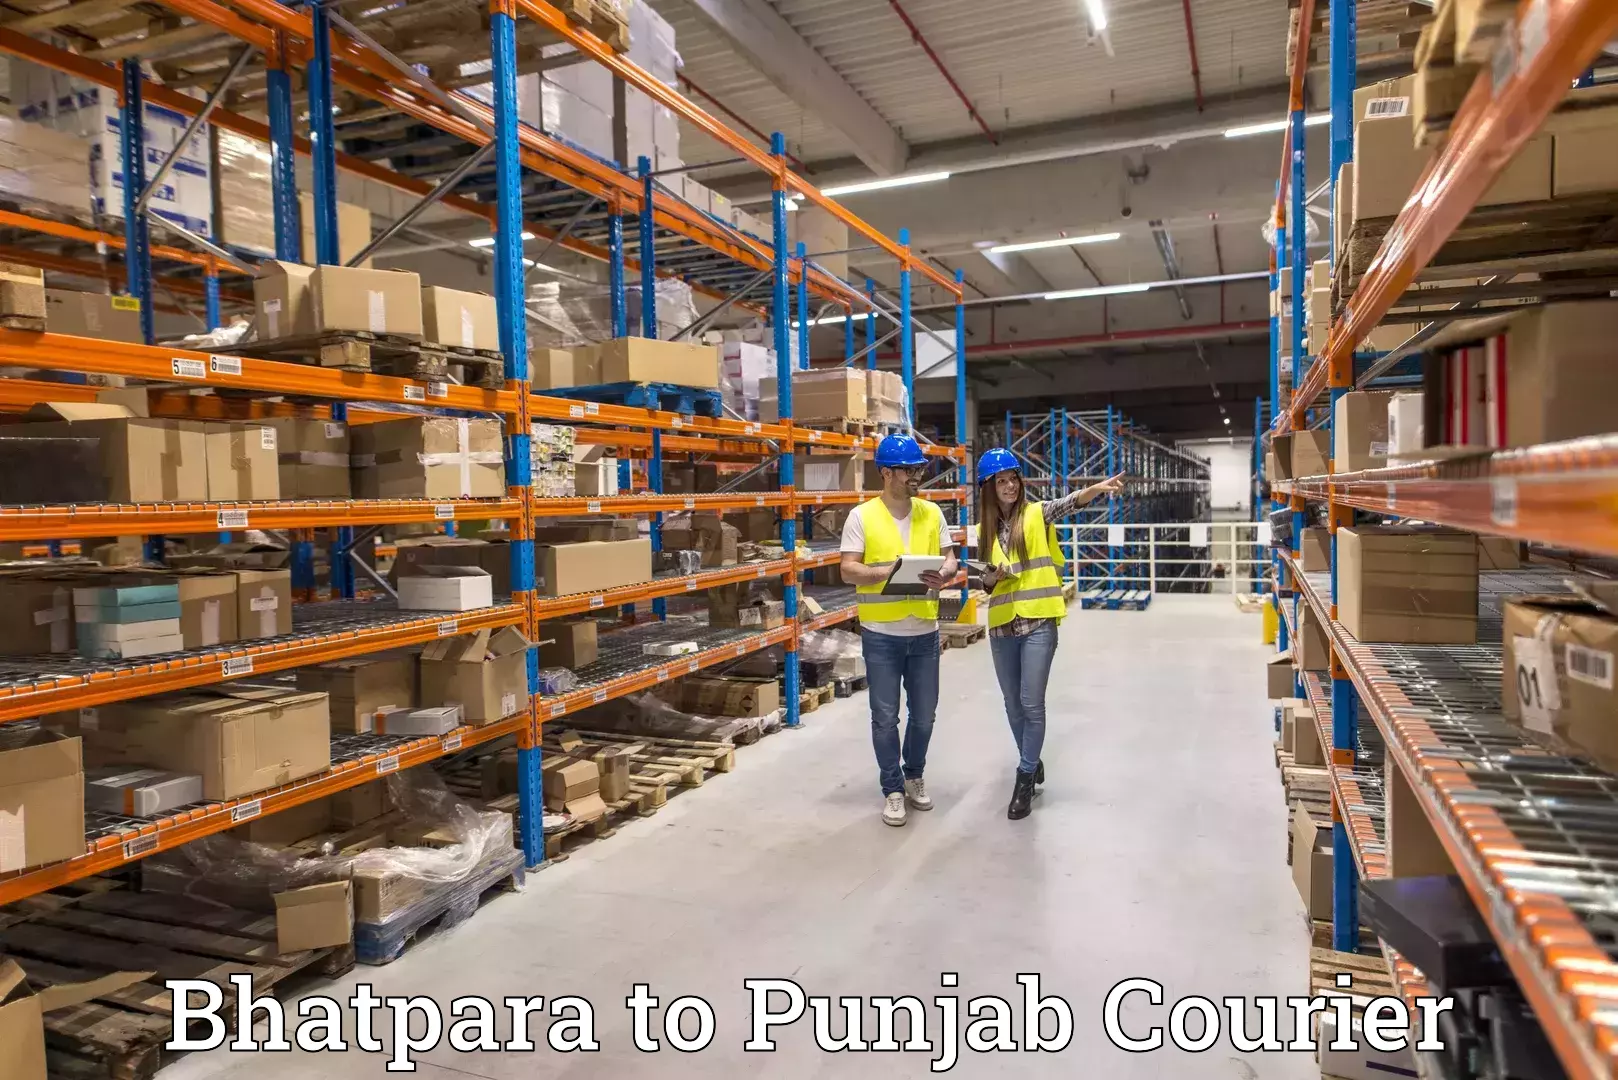 Courier service innovation Bhatpara to Patiala